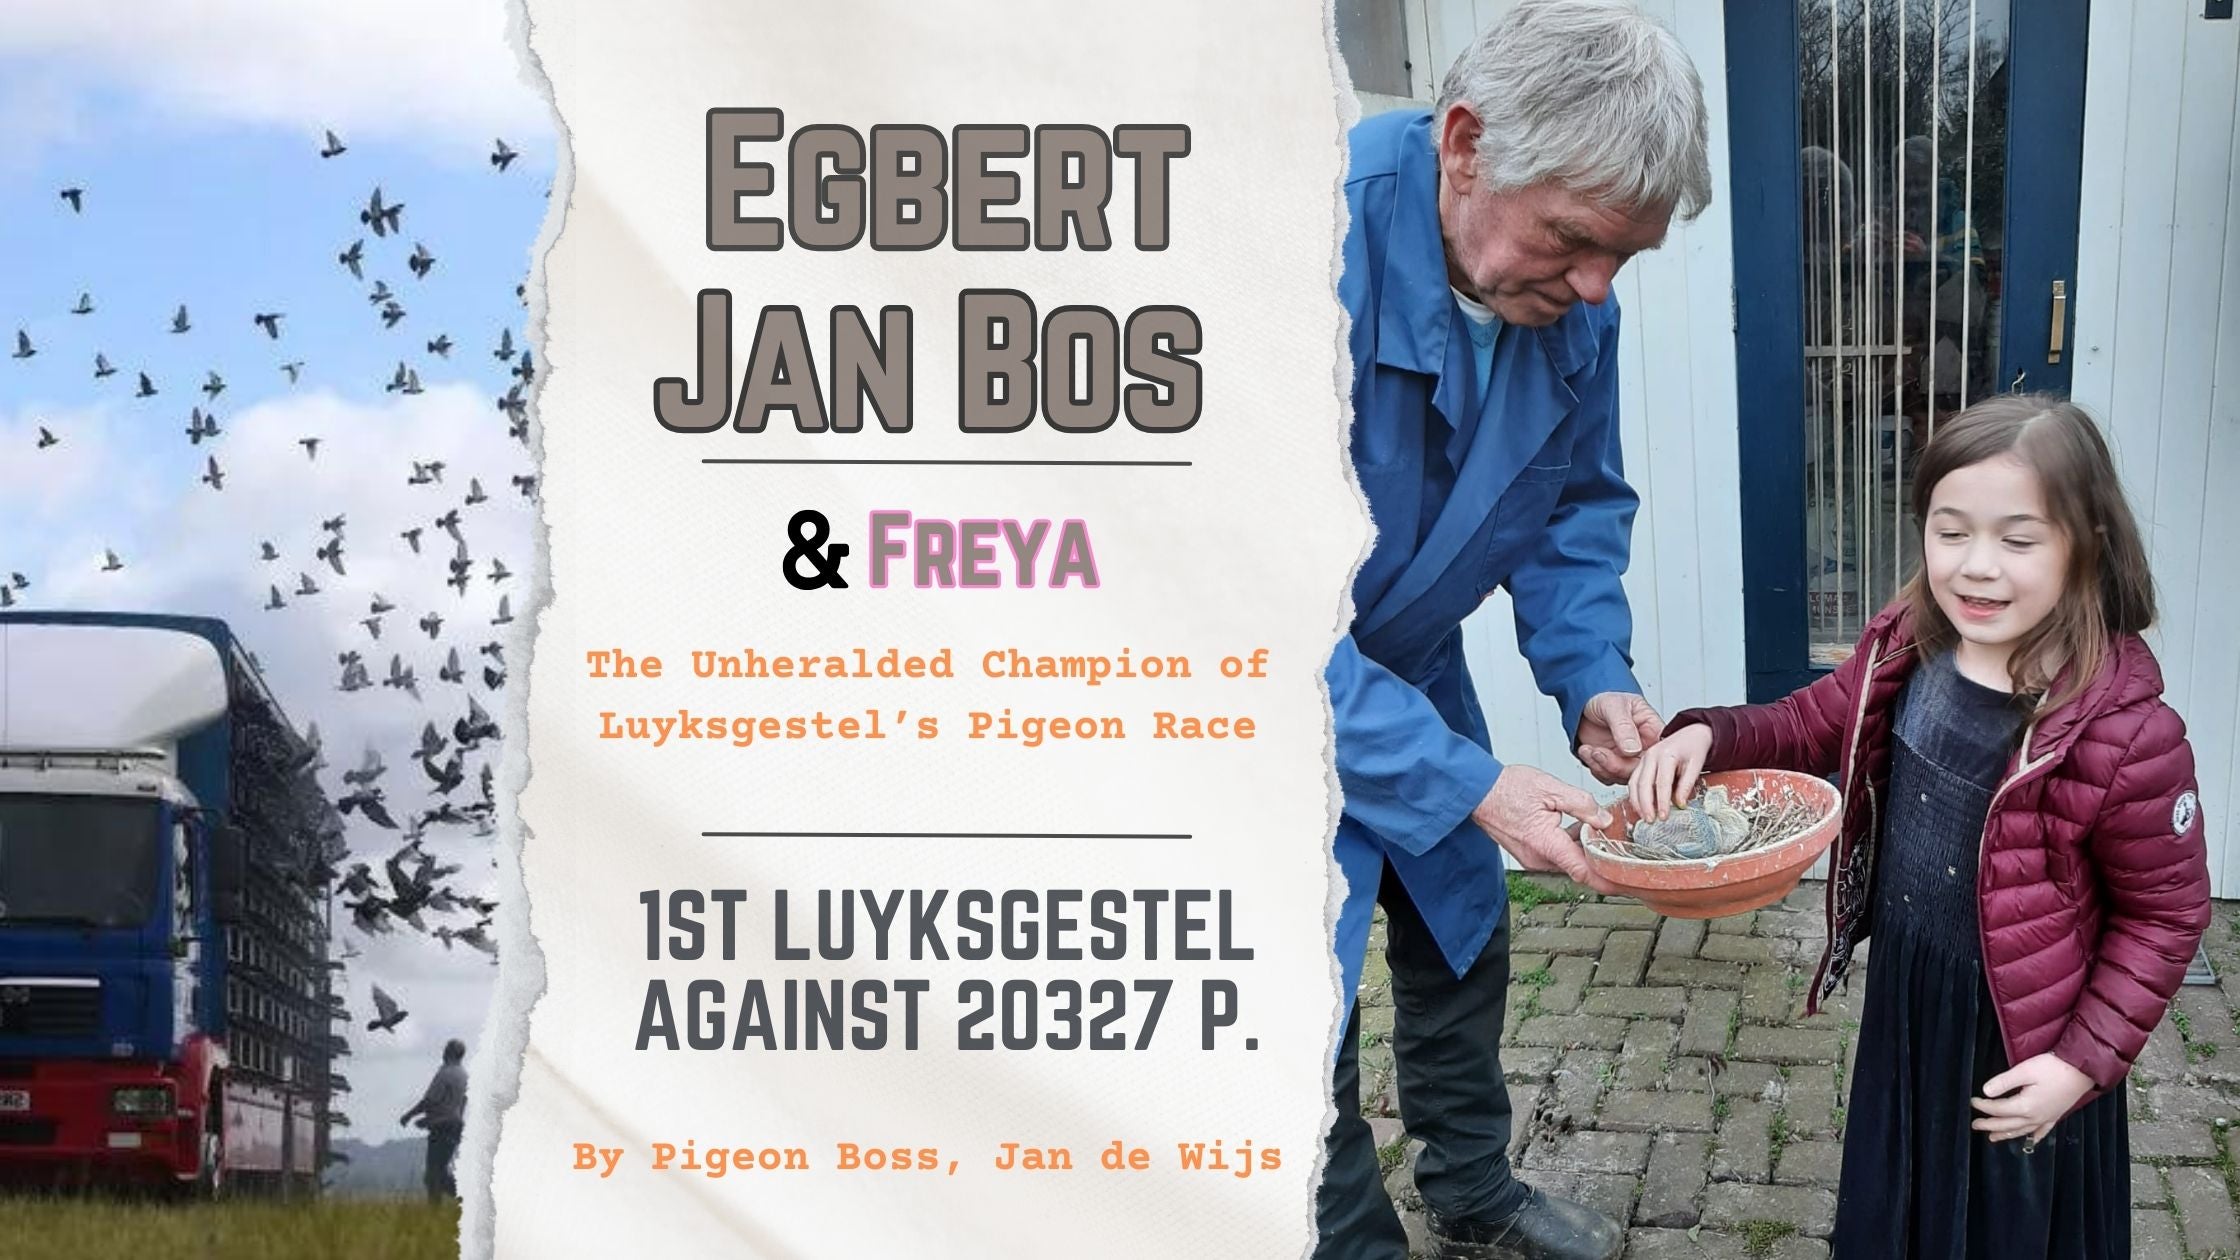 Egbert Jan Bos: The Unheralded Champion of Luyksgestel’s Pigeon Race